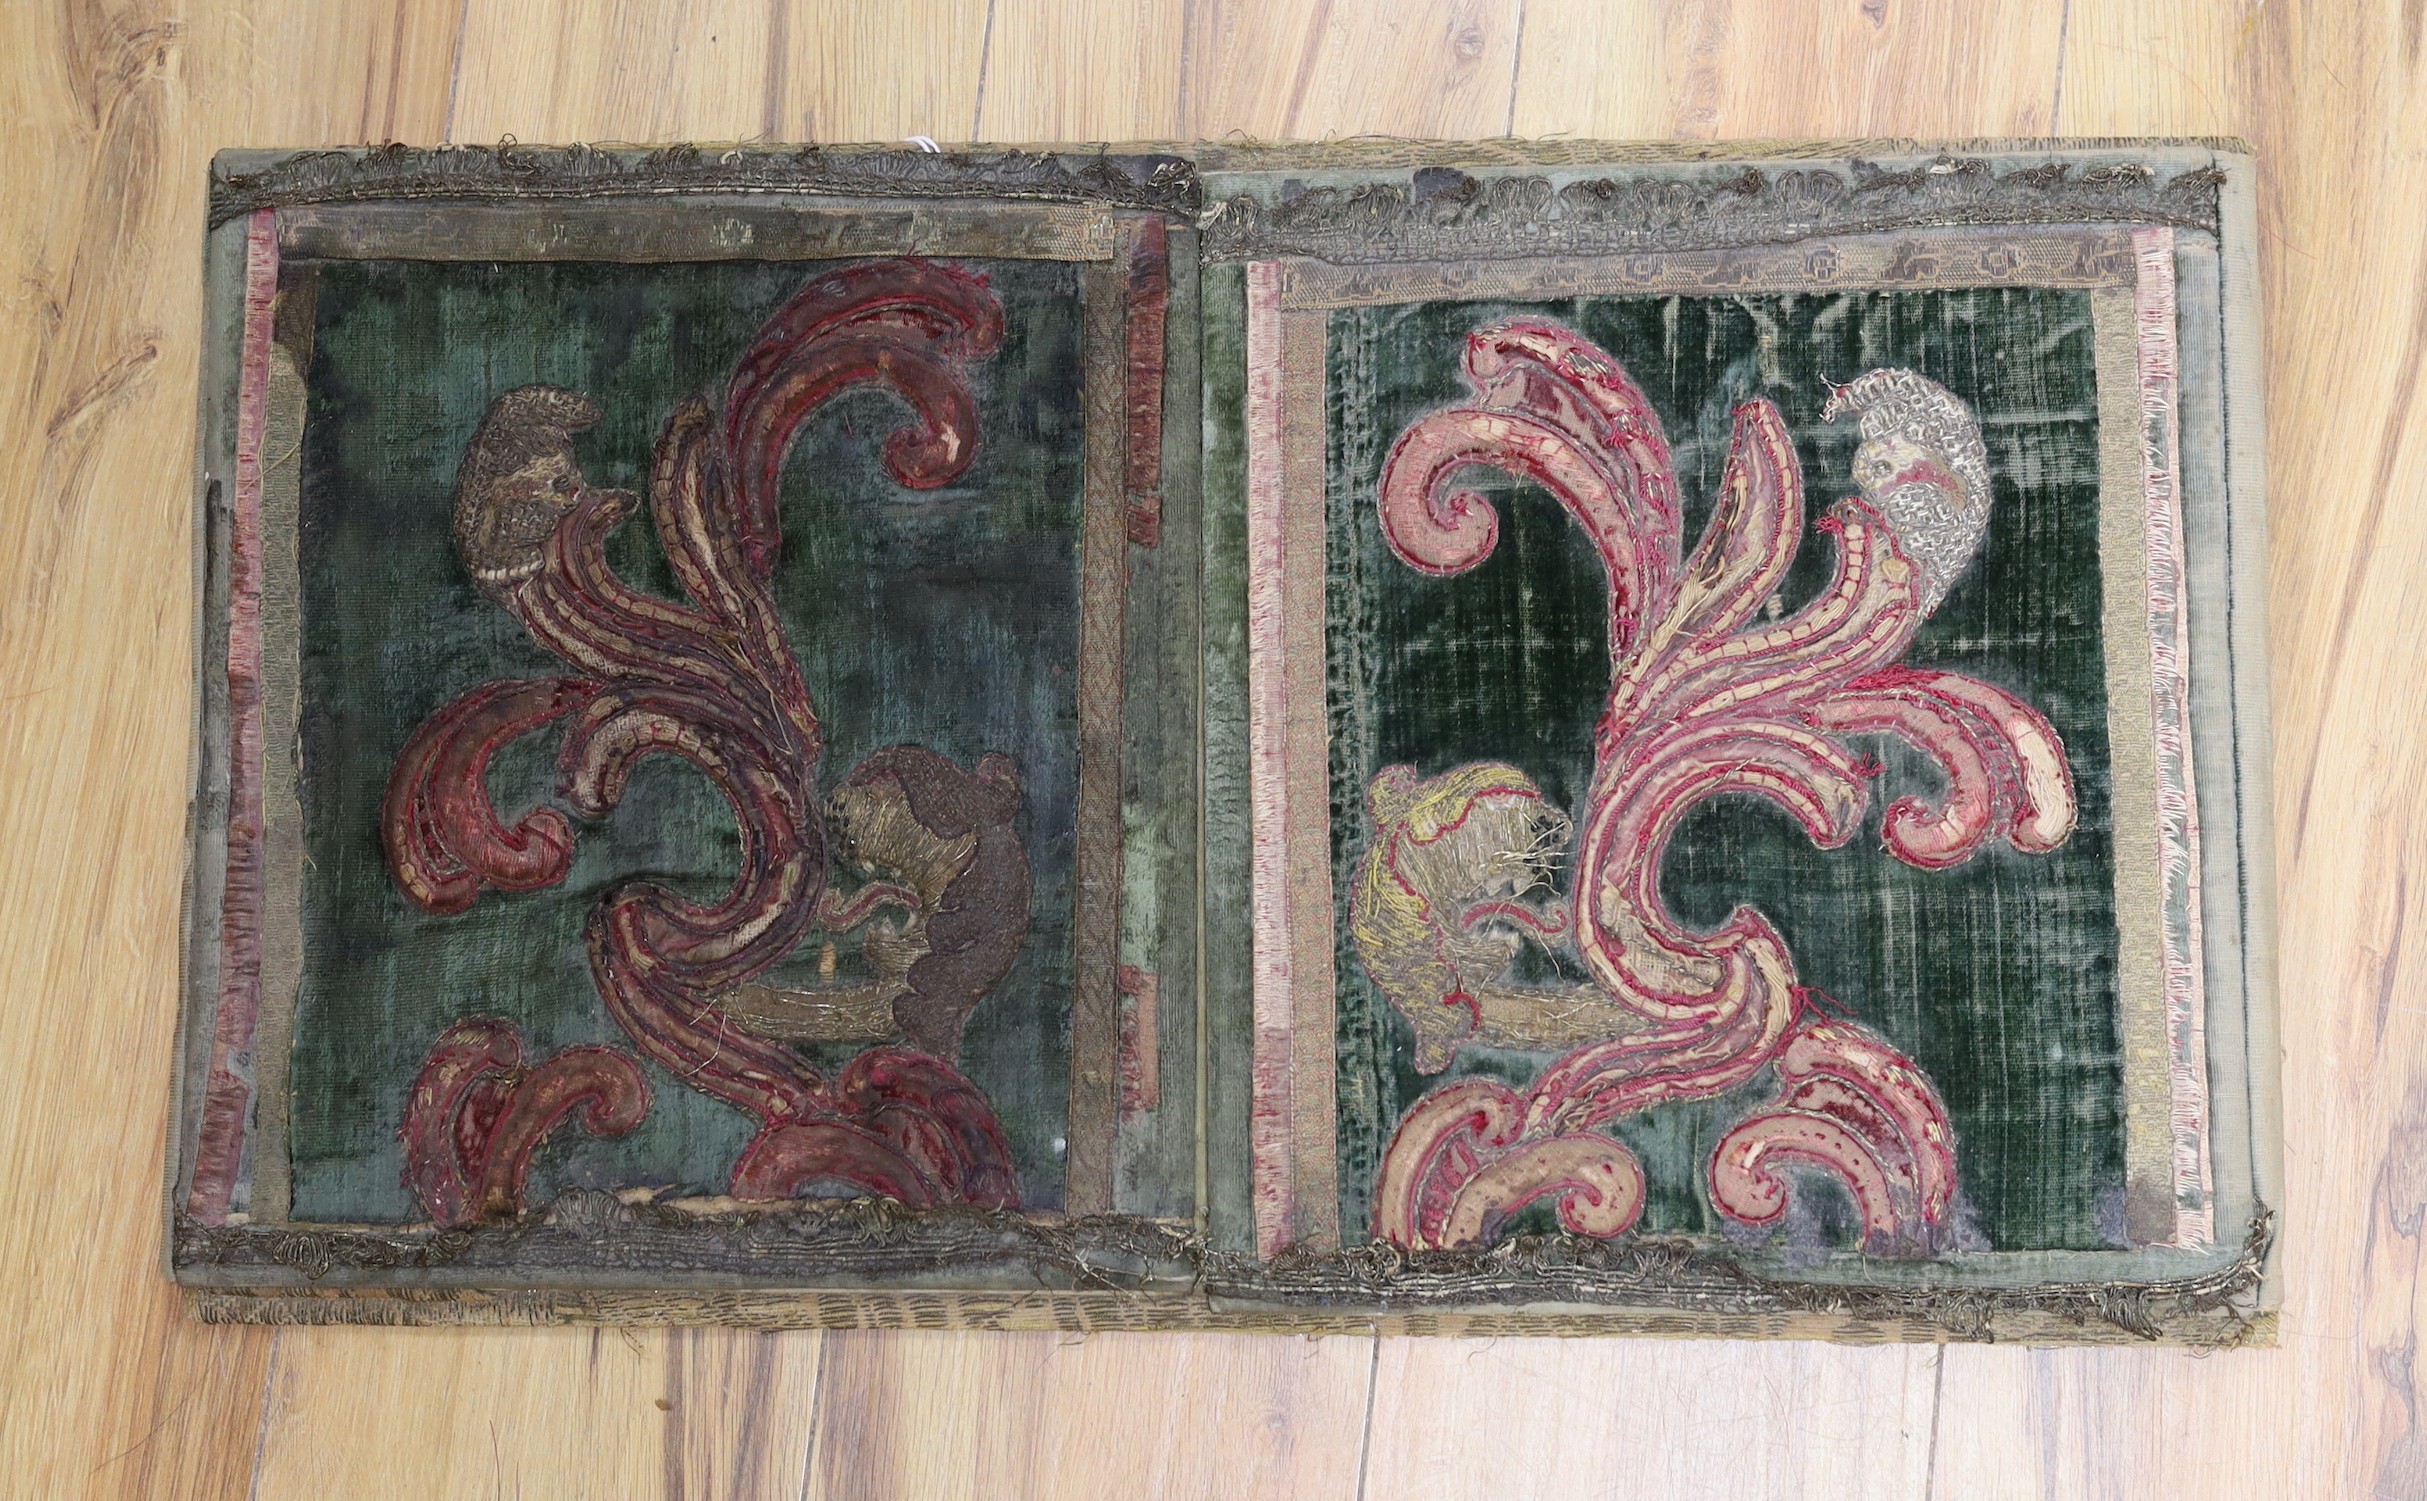 A desk blotter composed of 17th/18th century fabrics, 35x60cm